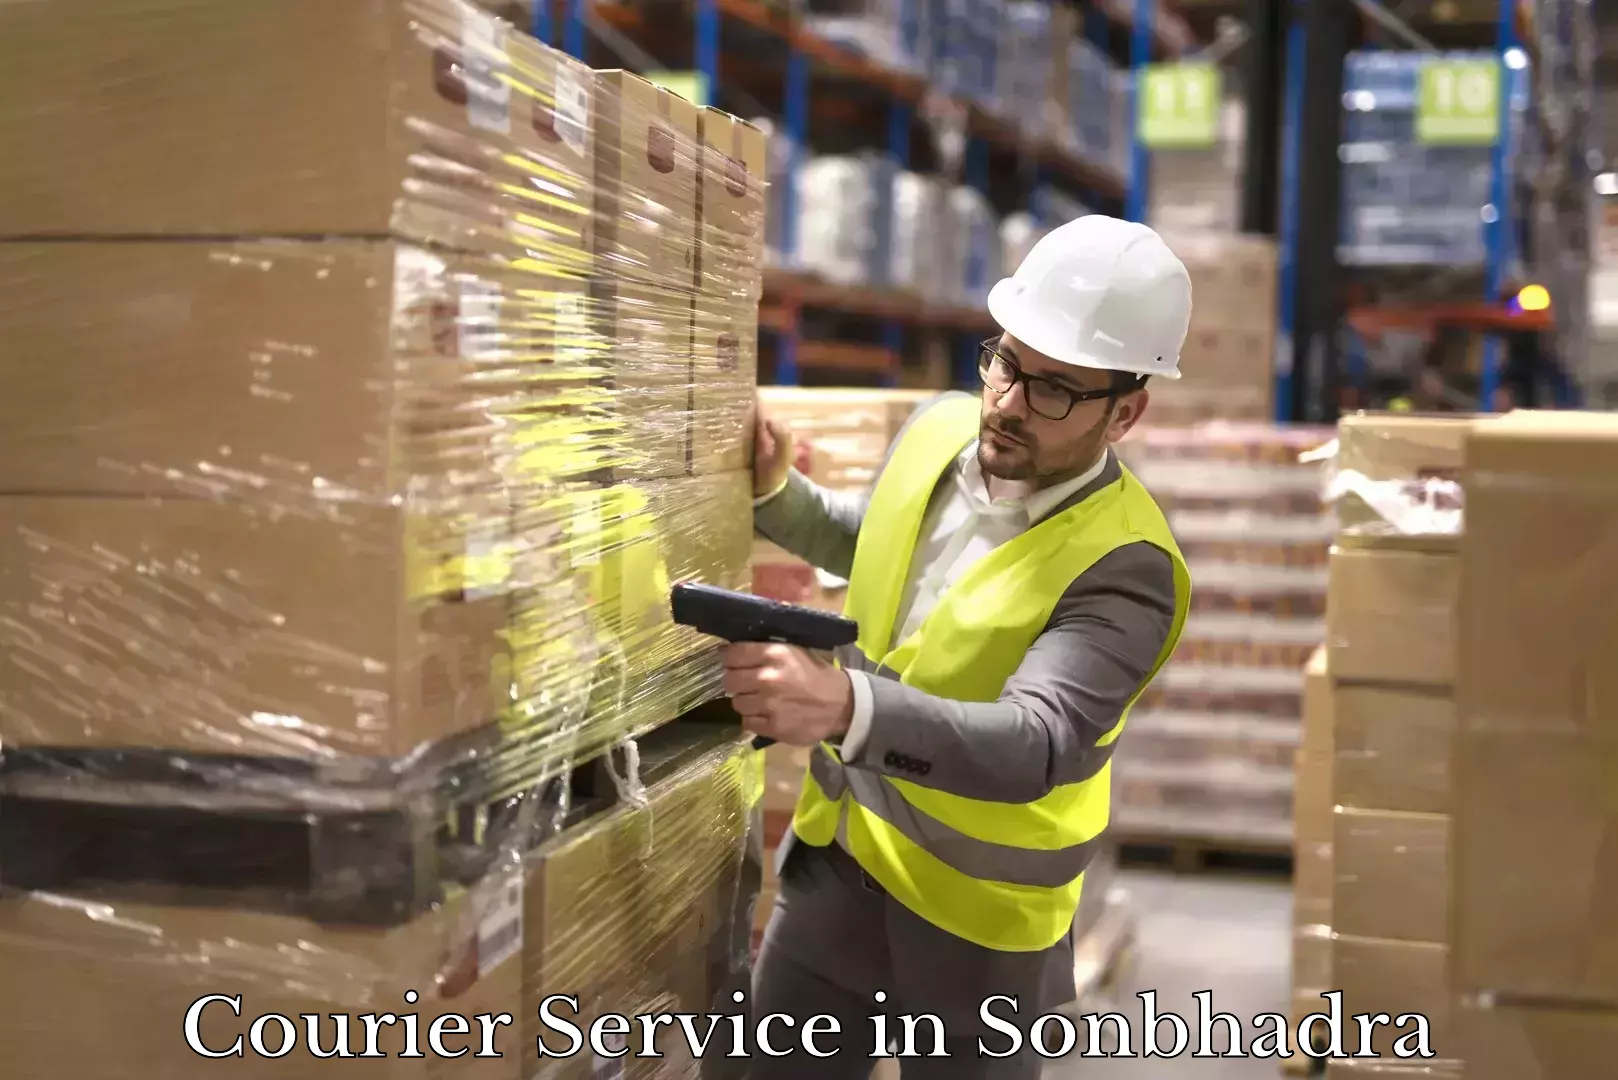 Logistics service provider in Sonbhadra